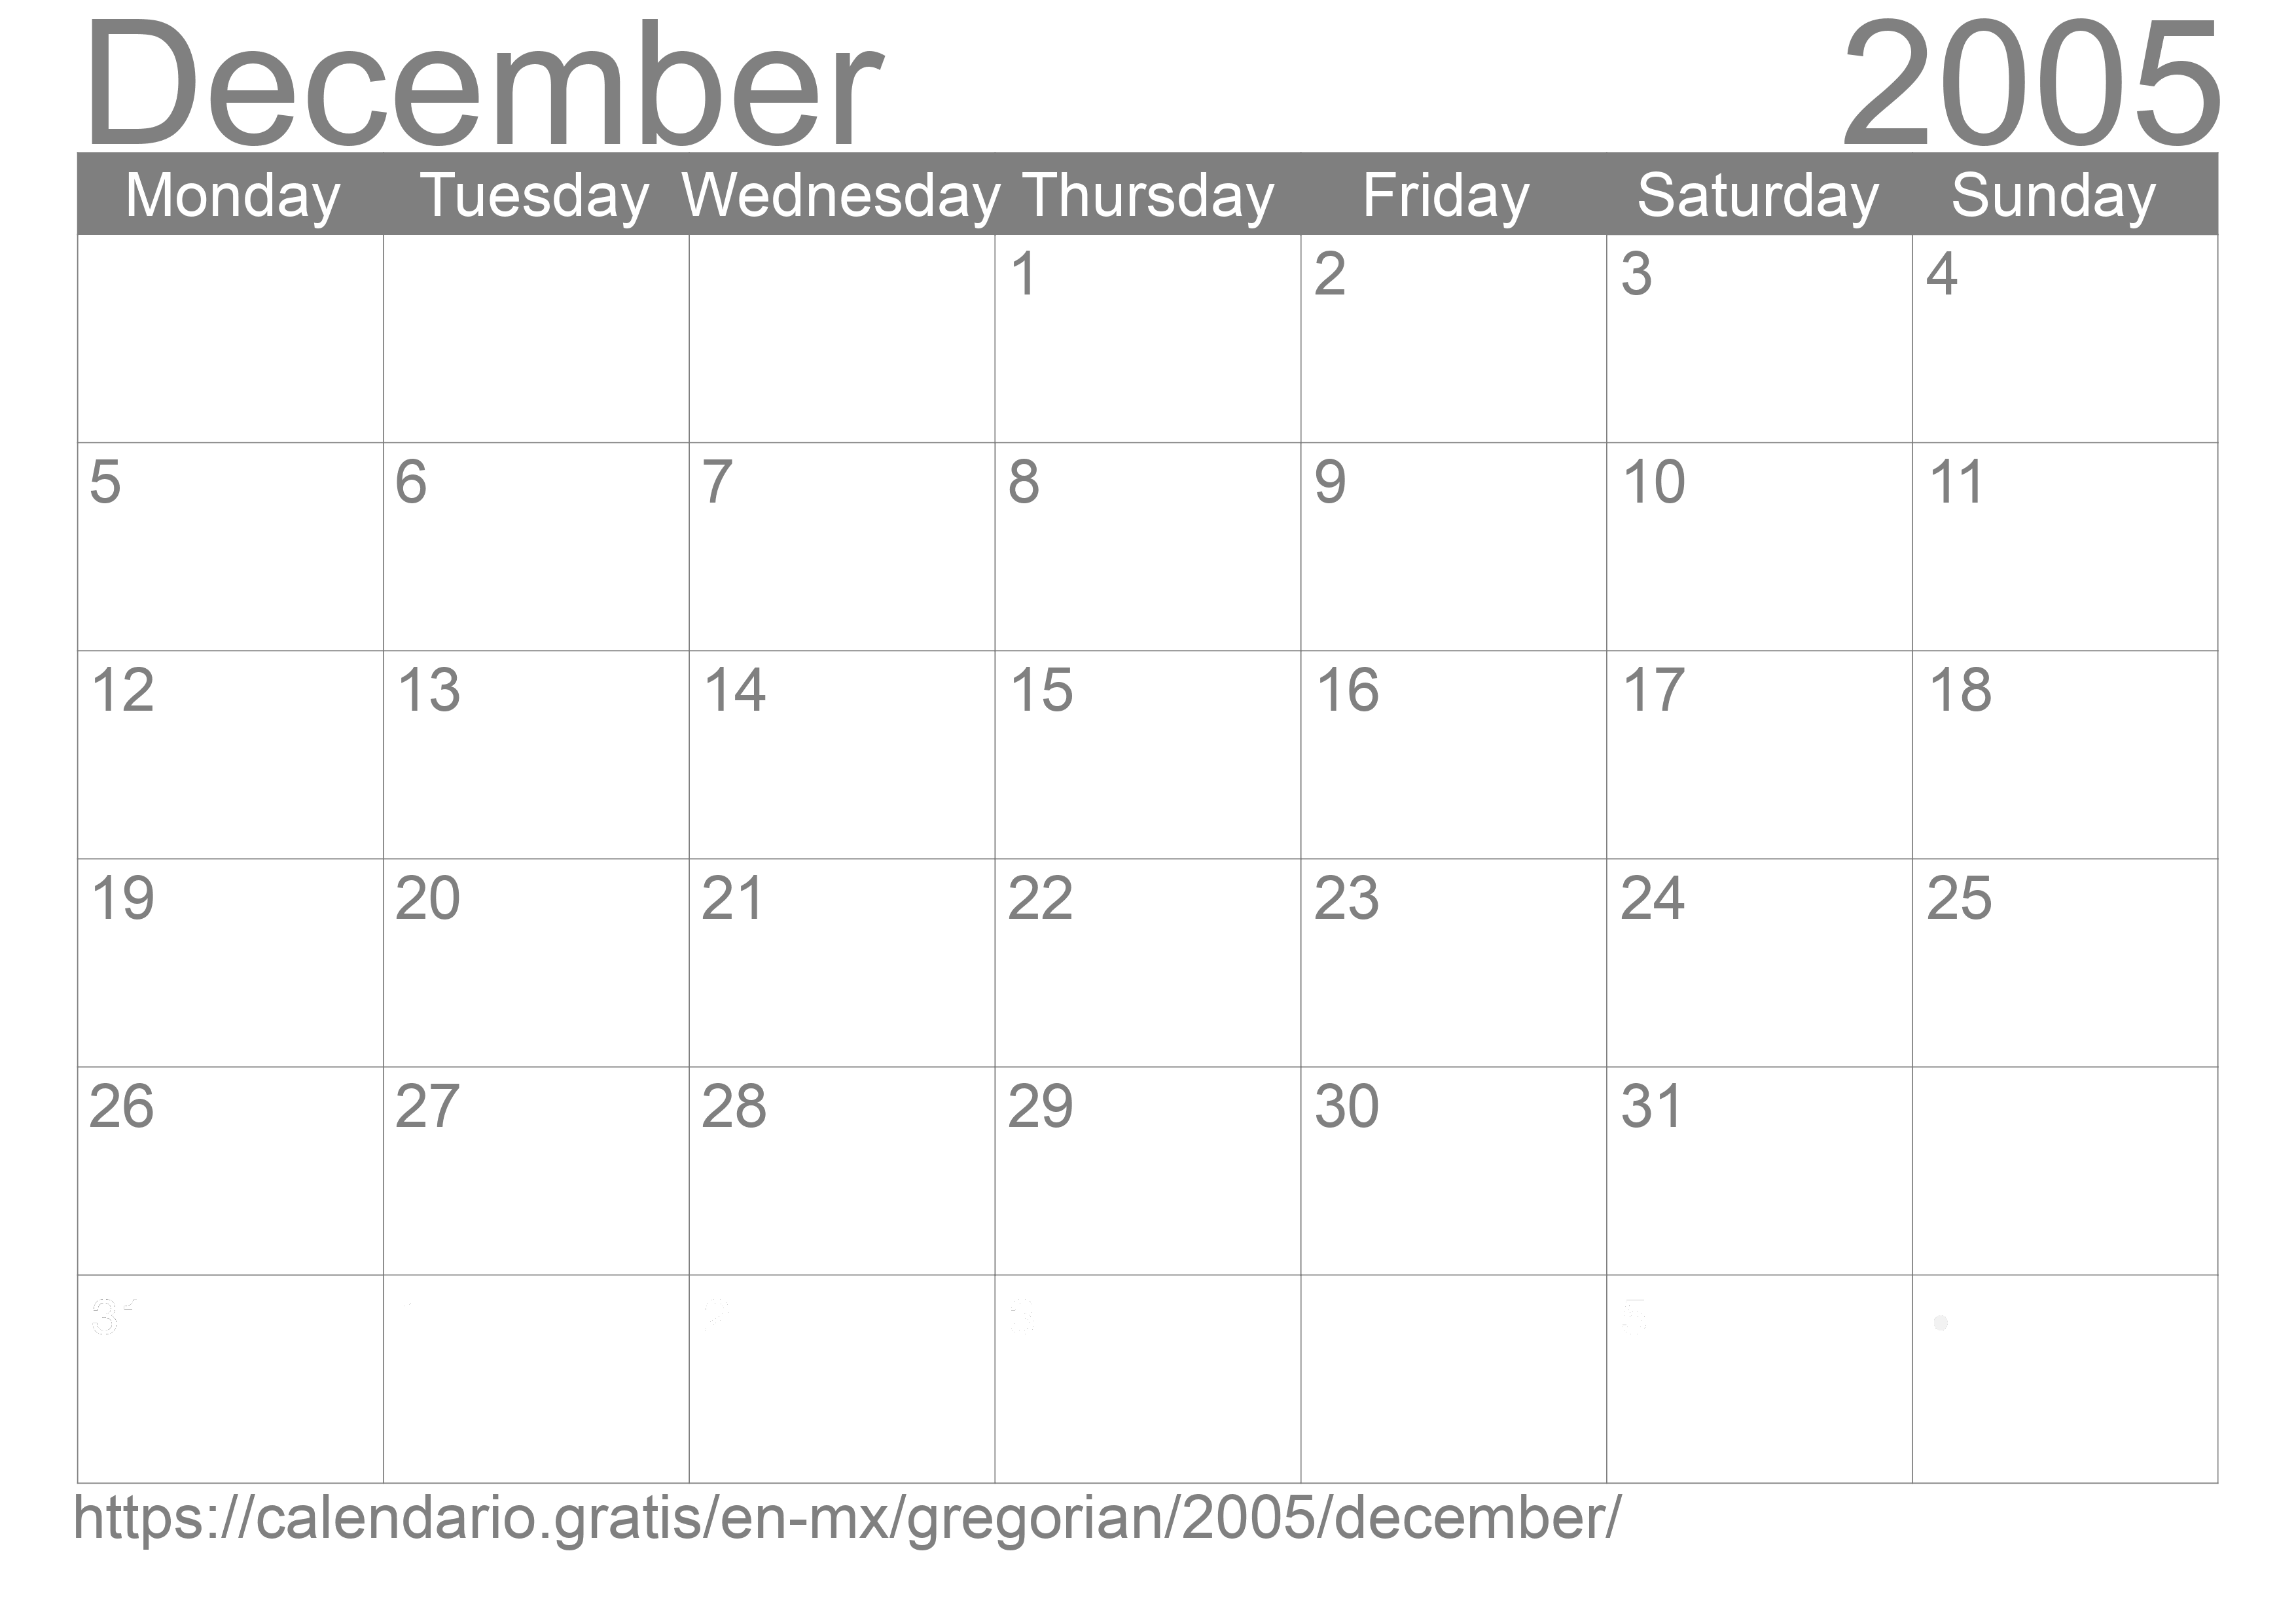 Calendar December 2005 to print